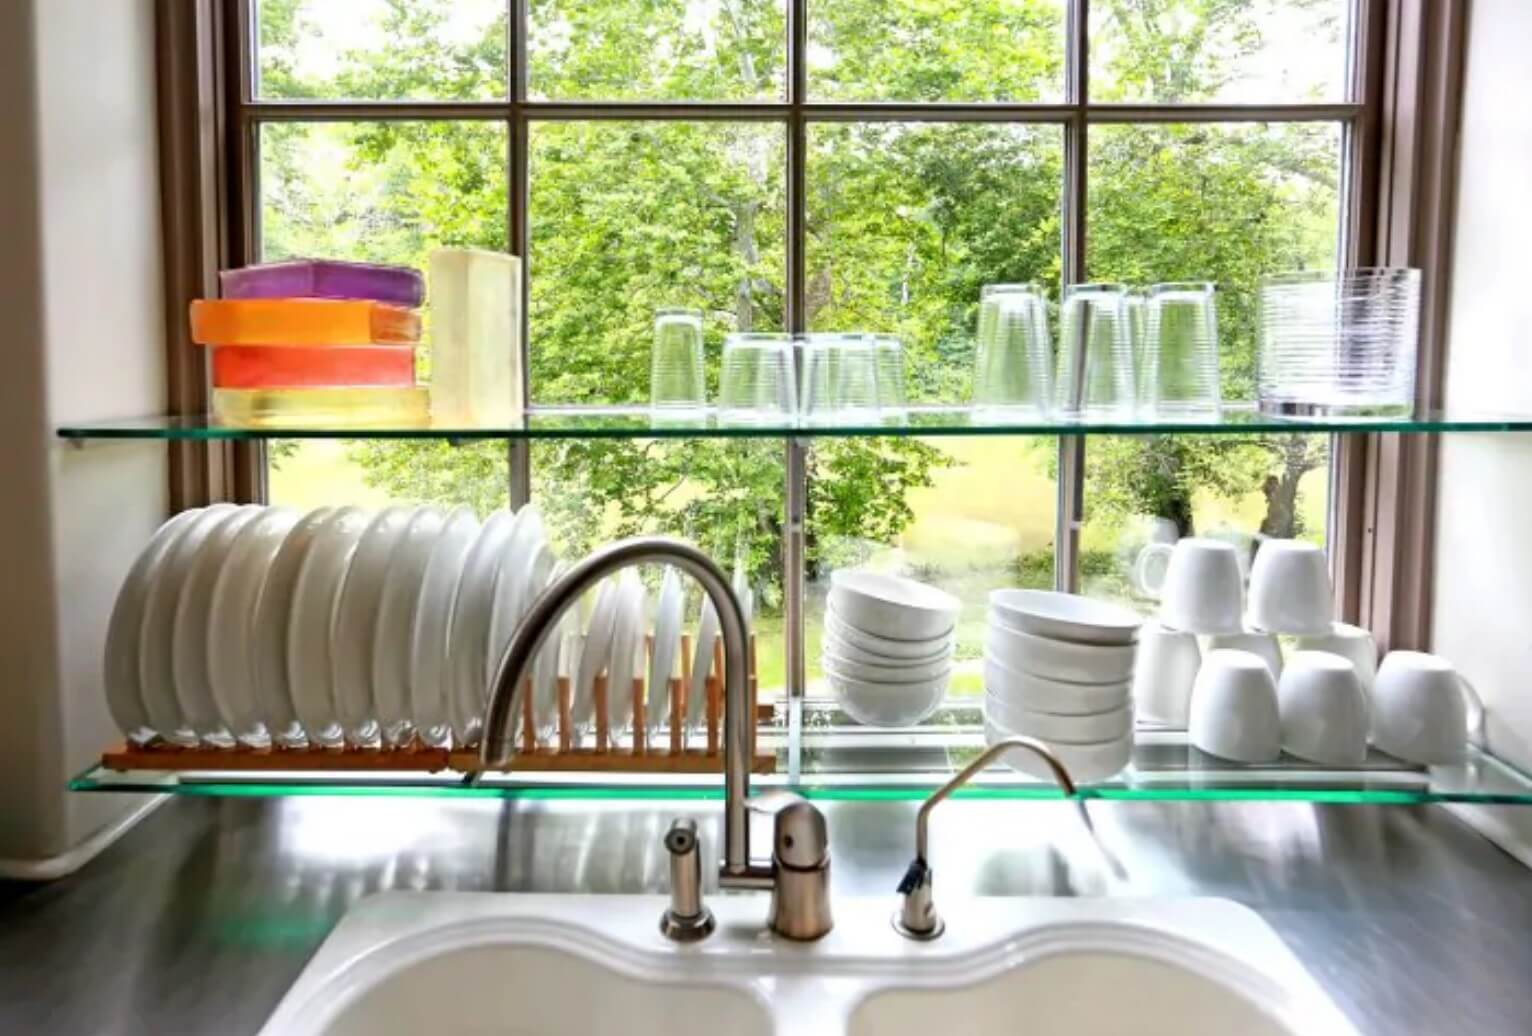 14 clutter free kitchen countertop ideas